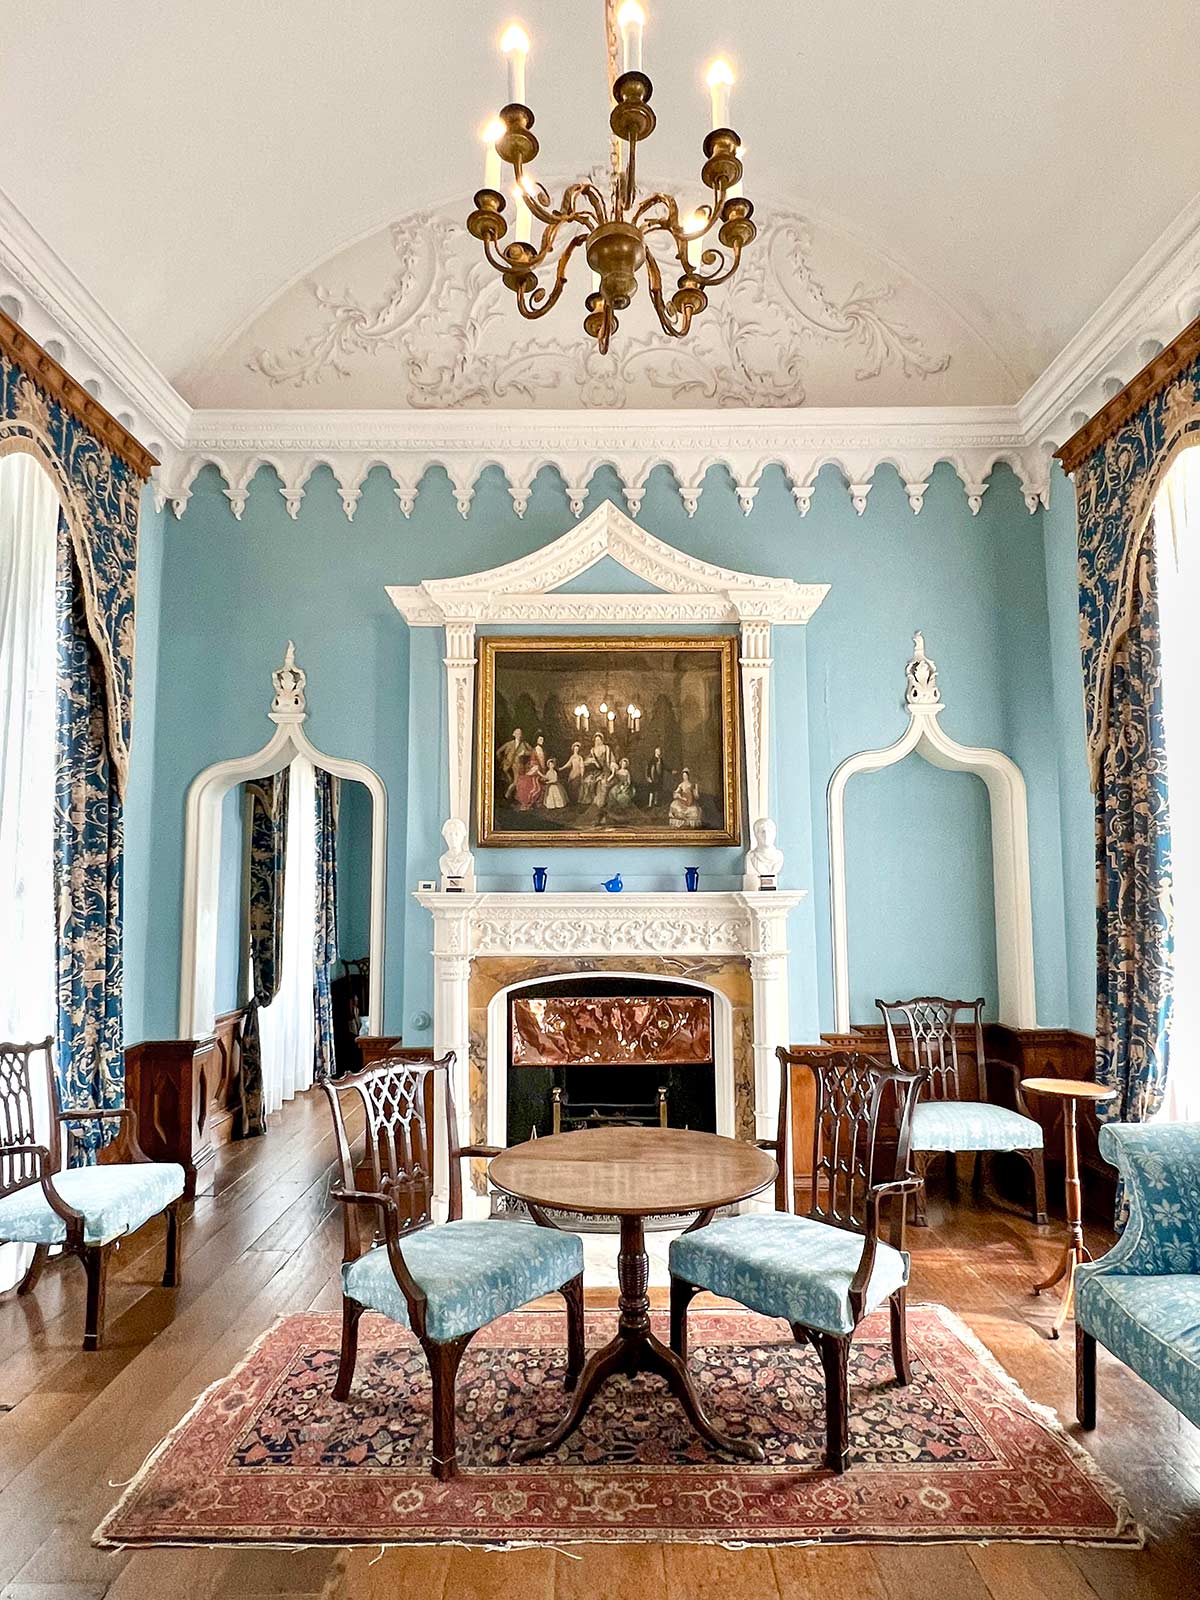 Cabinet bleu, mont St-Michel, Cornouailles, Angleterre / Blue room, St Michael’s Mount, Cornwall, UK